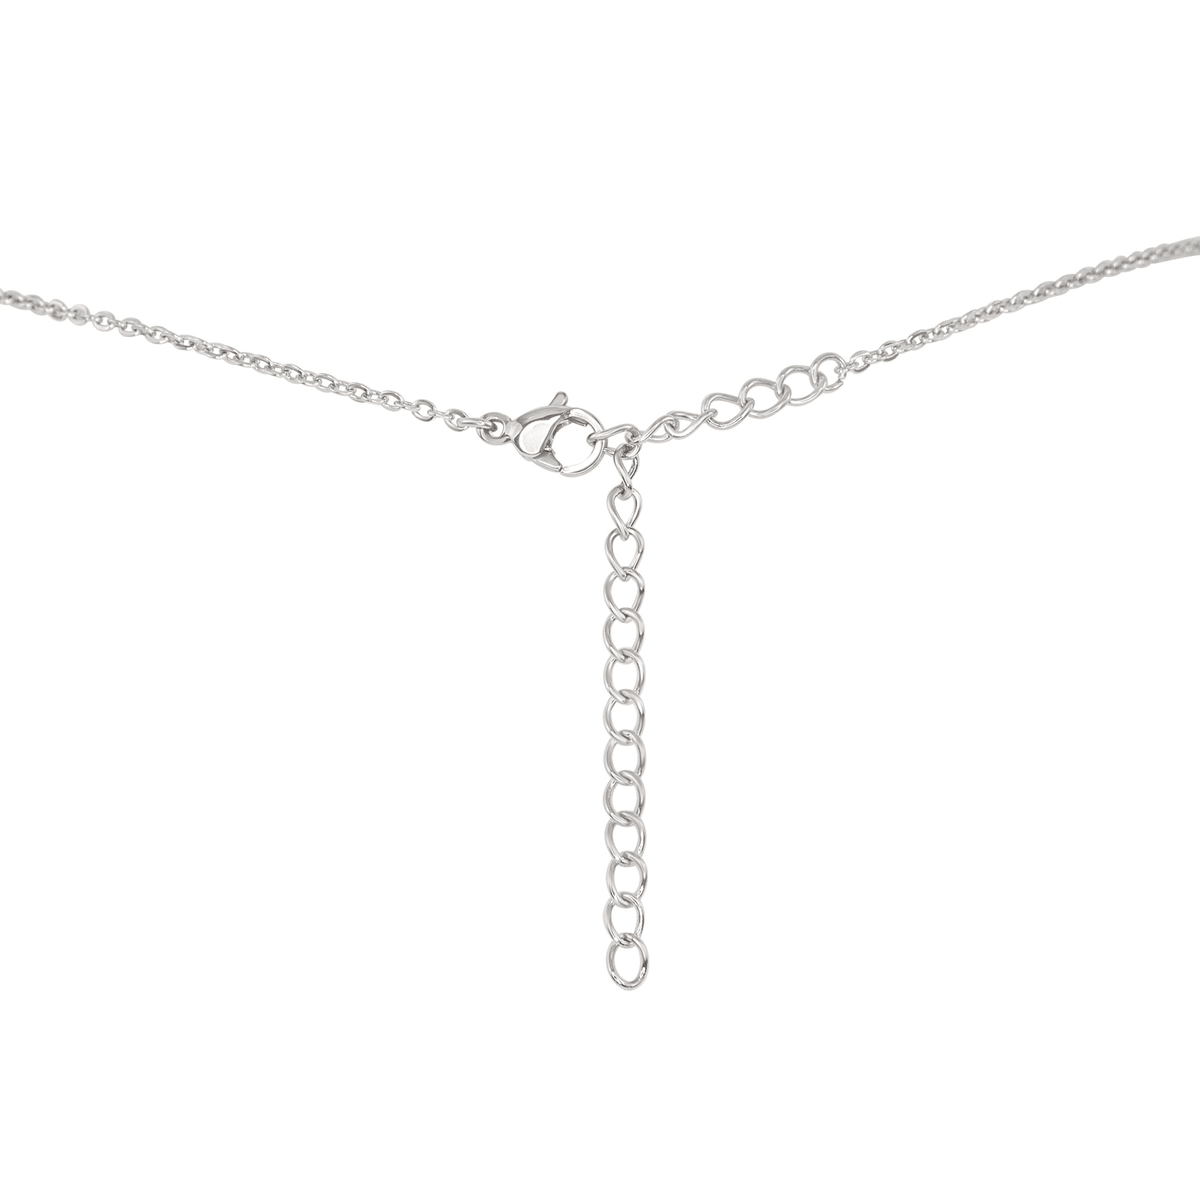 Tiny Raw Kyanite Pendant Necklace - Tiny Raw Kyanite Pendant Necklace - Sterling Silver / Cable - Luna Tide Handmade Crystal Jewellery